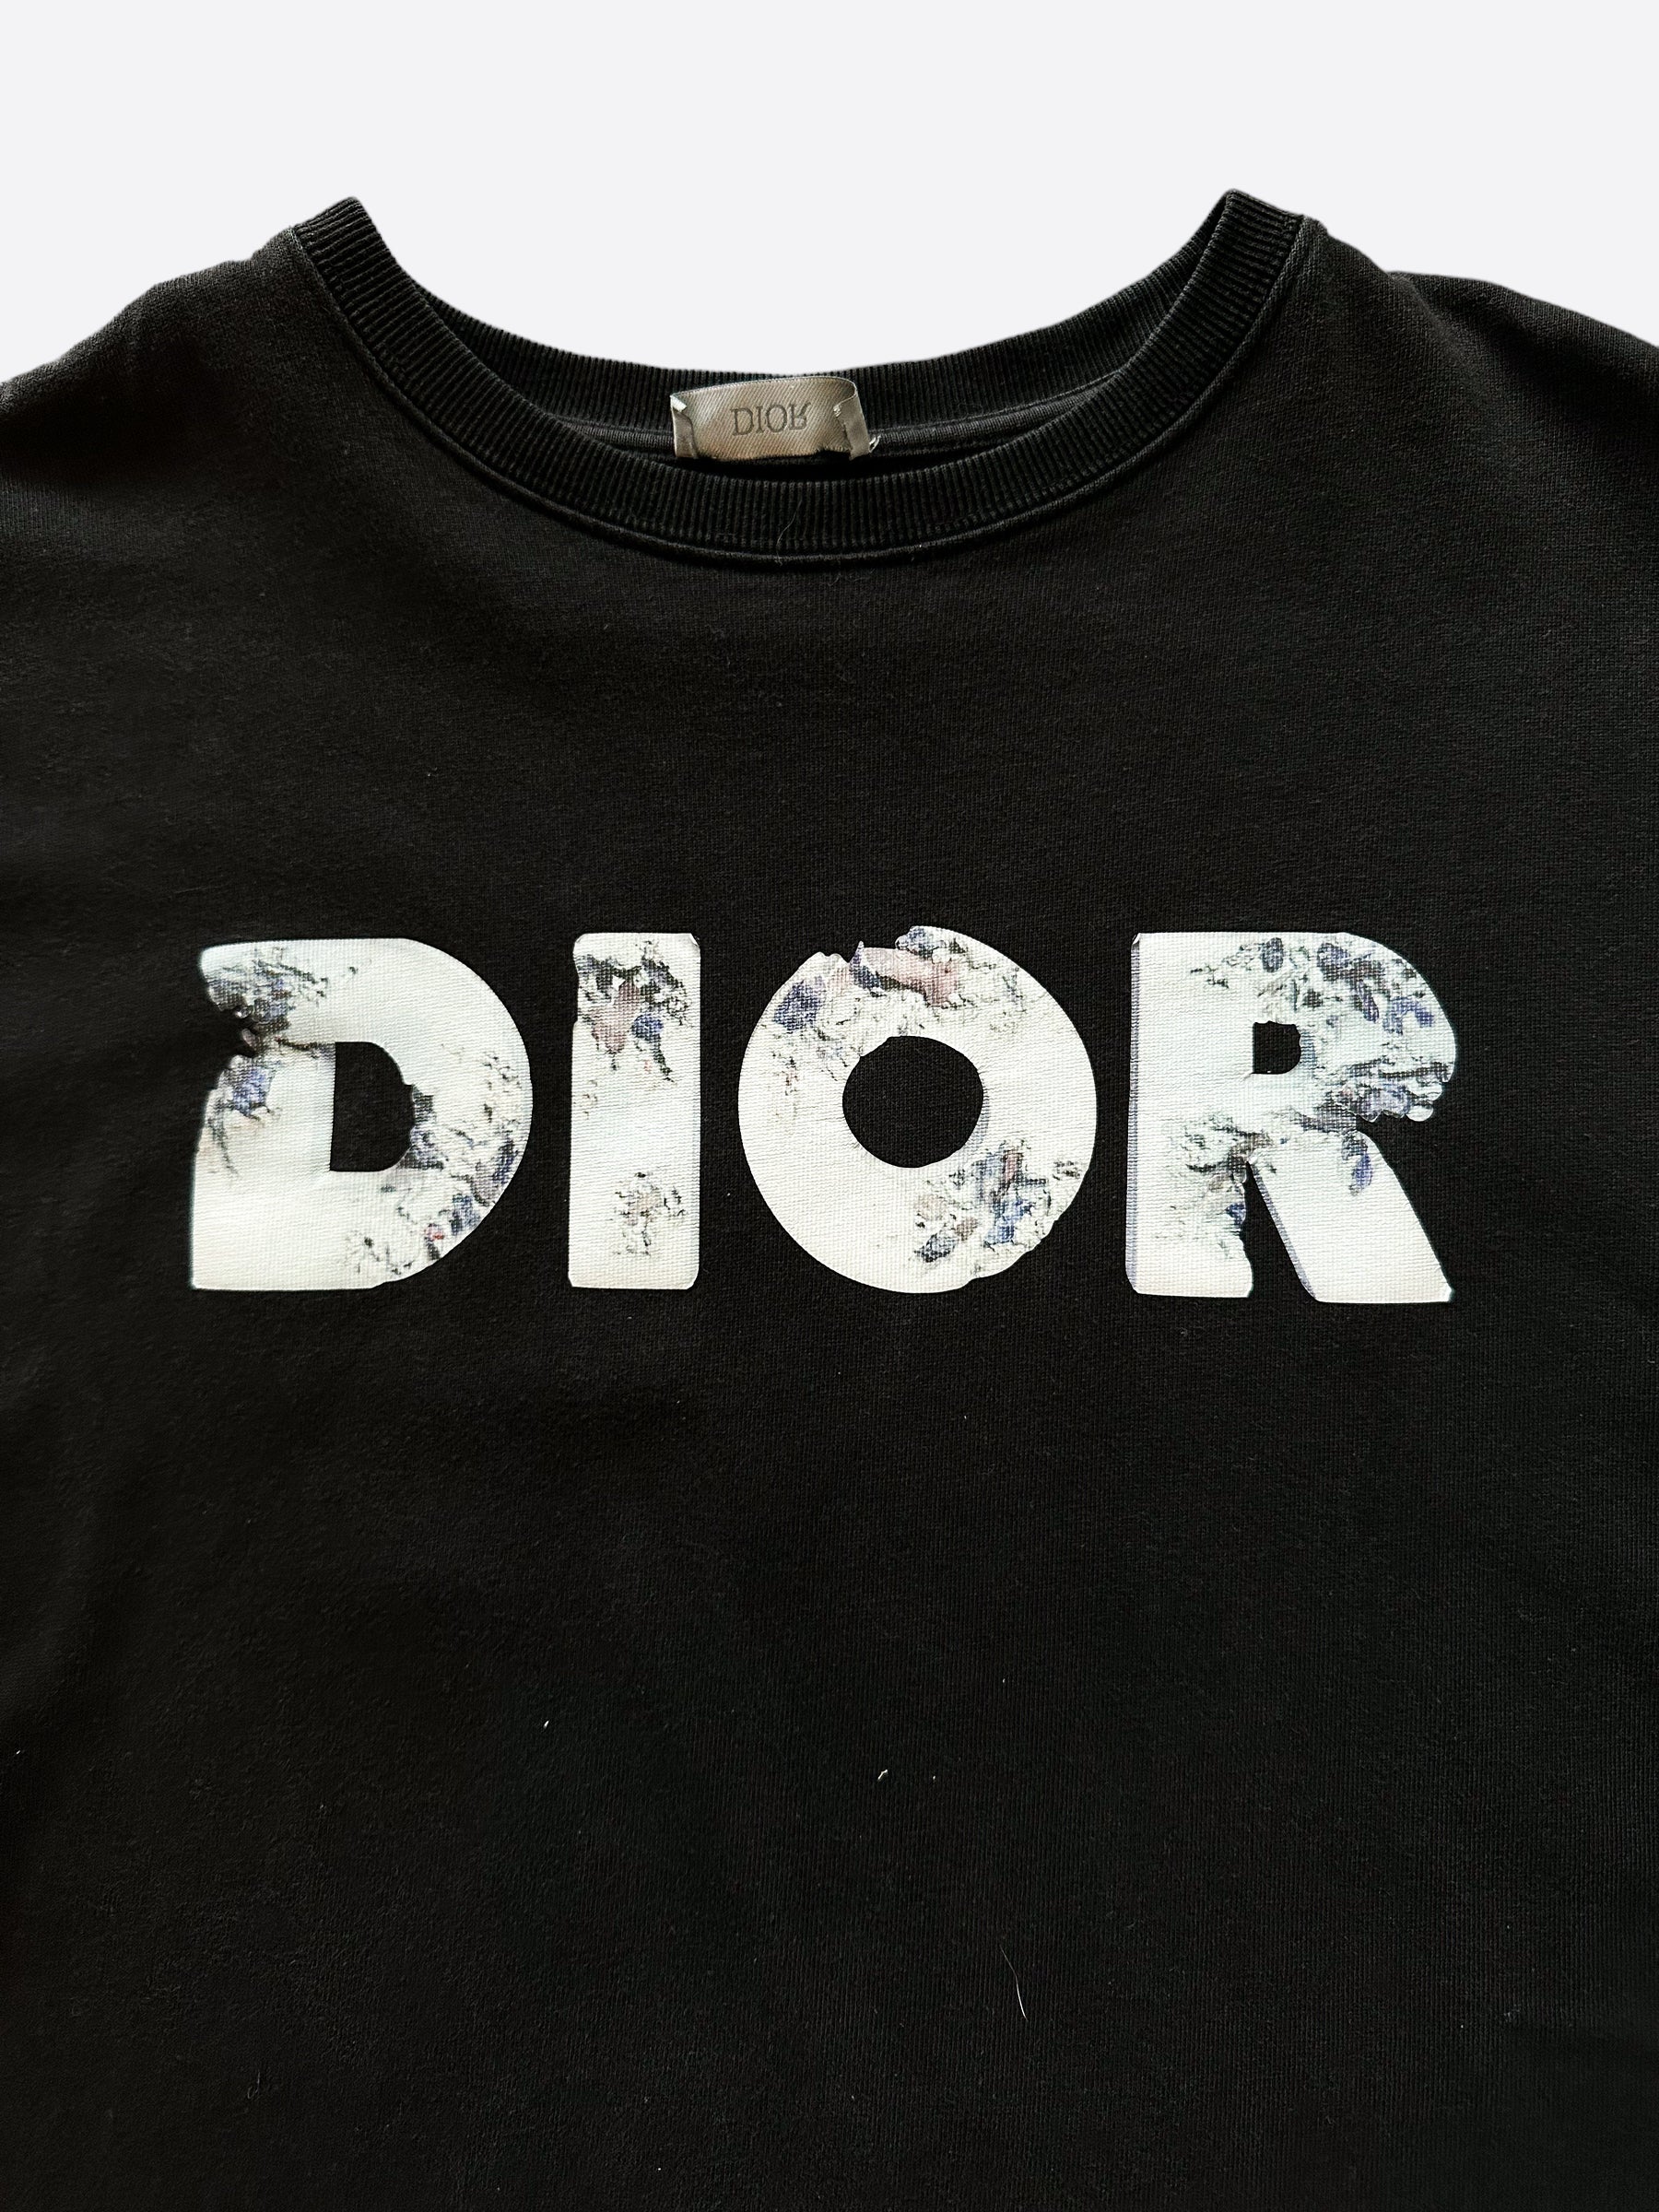 EXCLUSIVE Kim Jones Taps Daniel Arsham to Design Dior Show Set  WWD